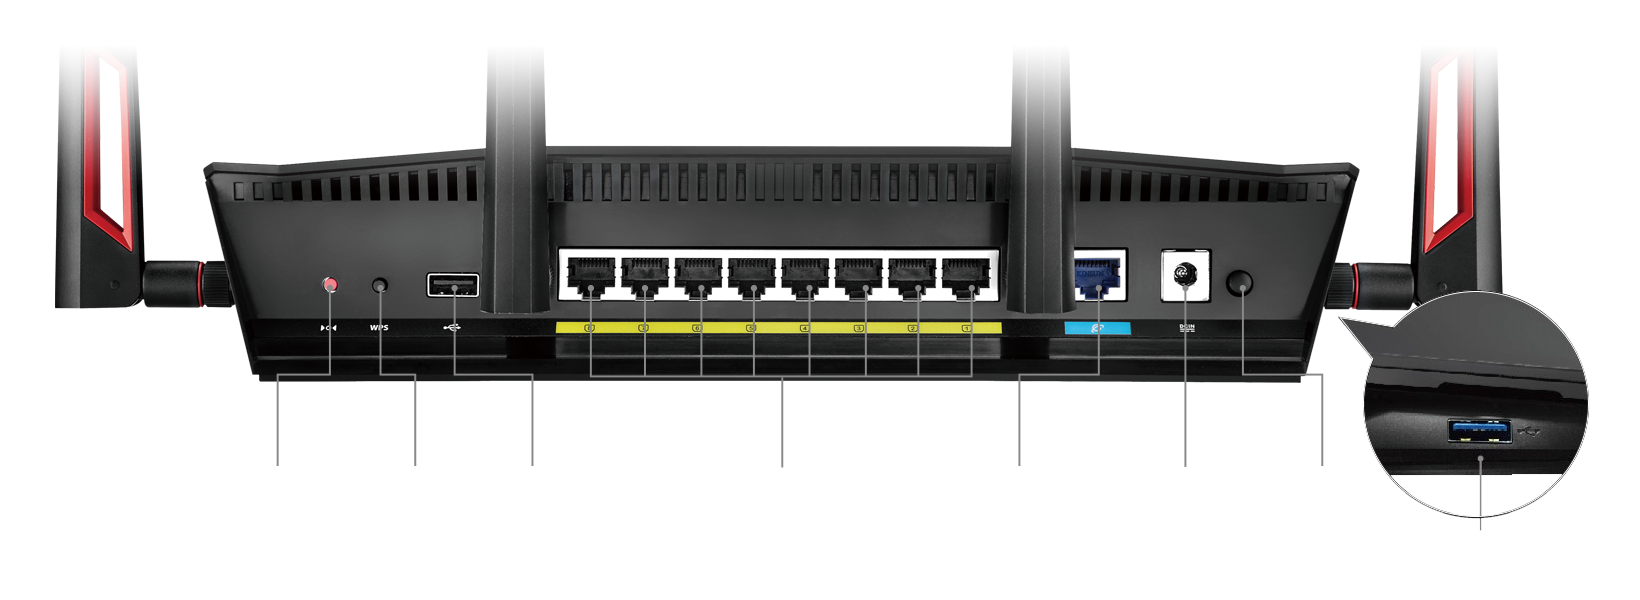 ASUS RT-AC88U provides extensive connectivity options